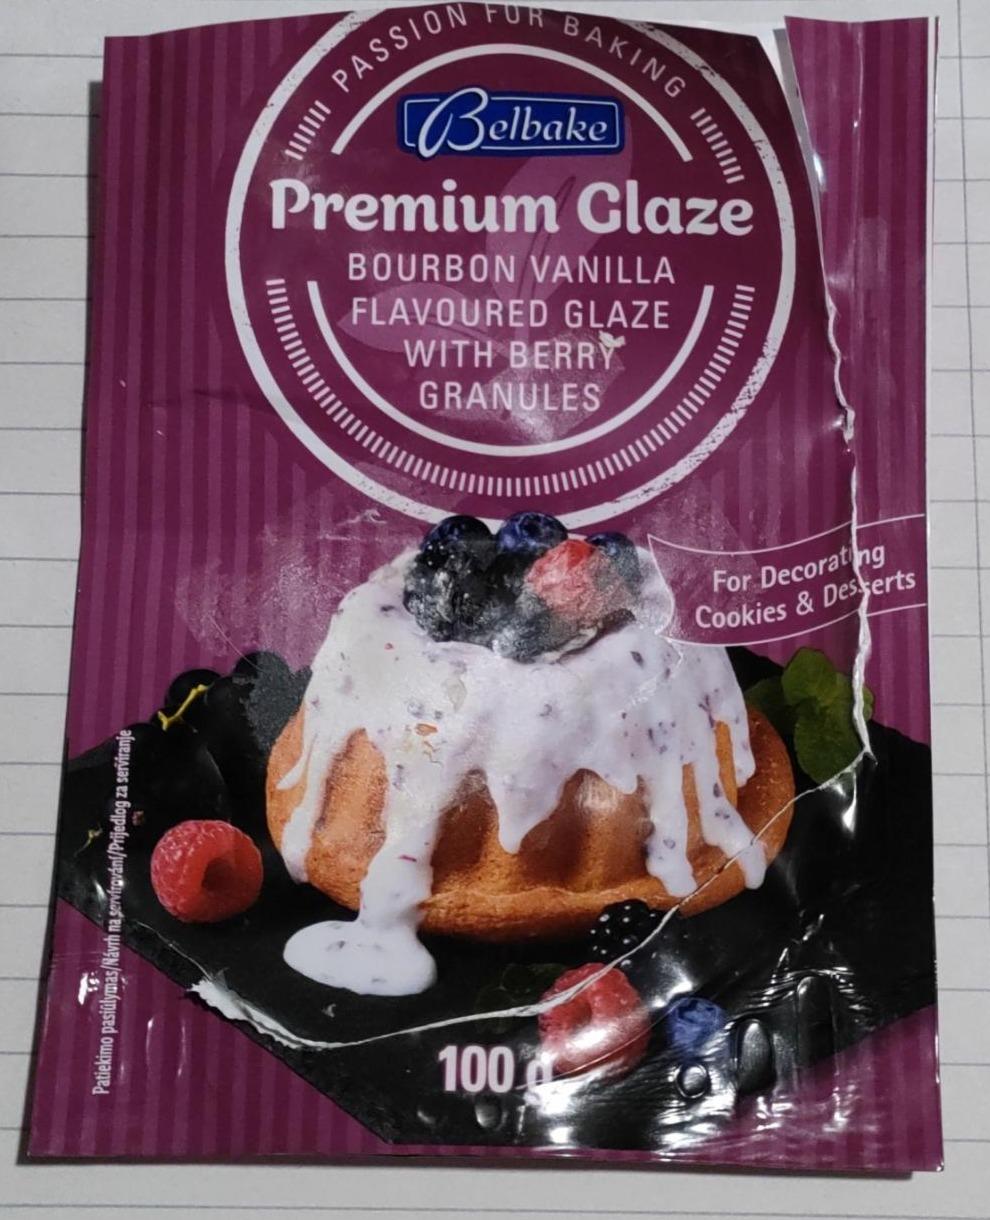 Fotografie - Premium Glaze Bourbon vanilla flavoured glaze with berry granules Belbake